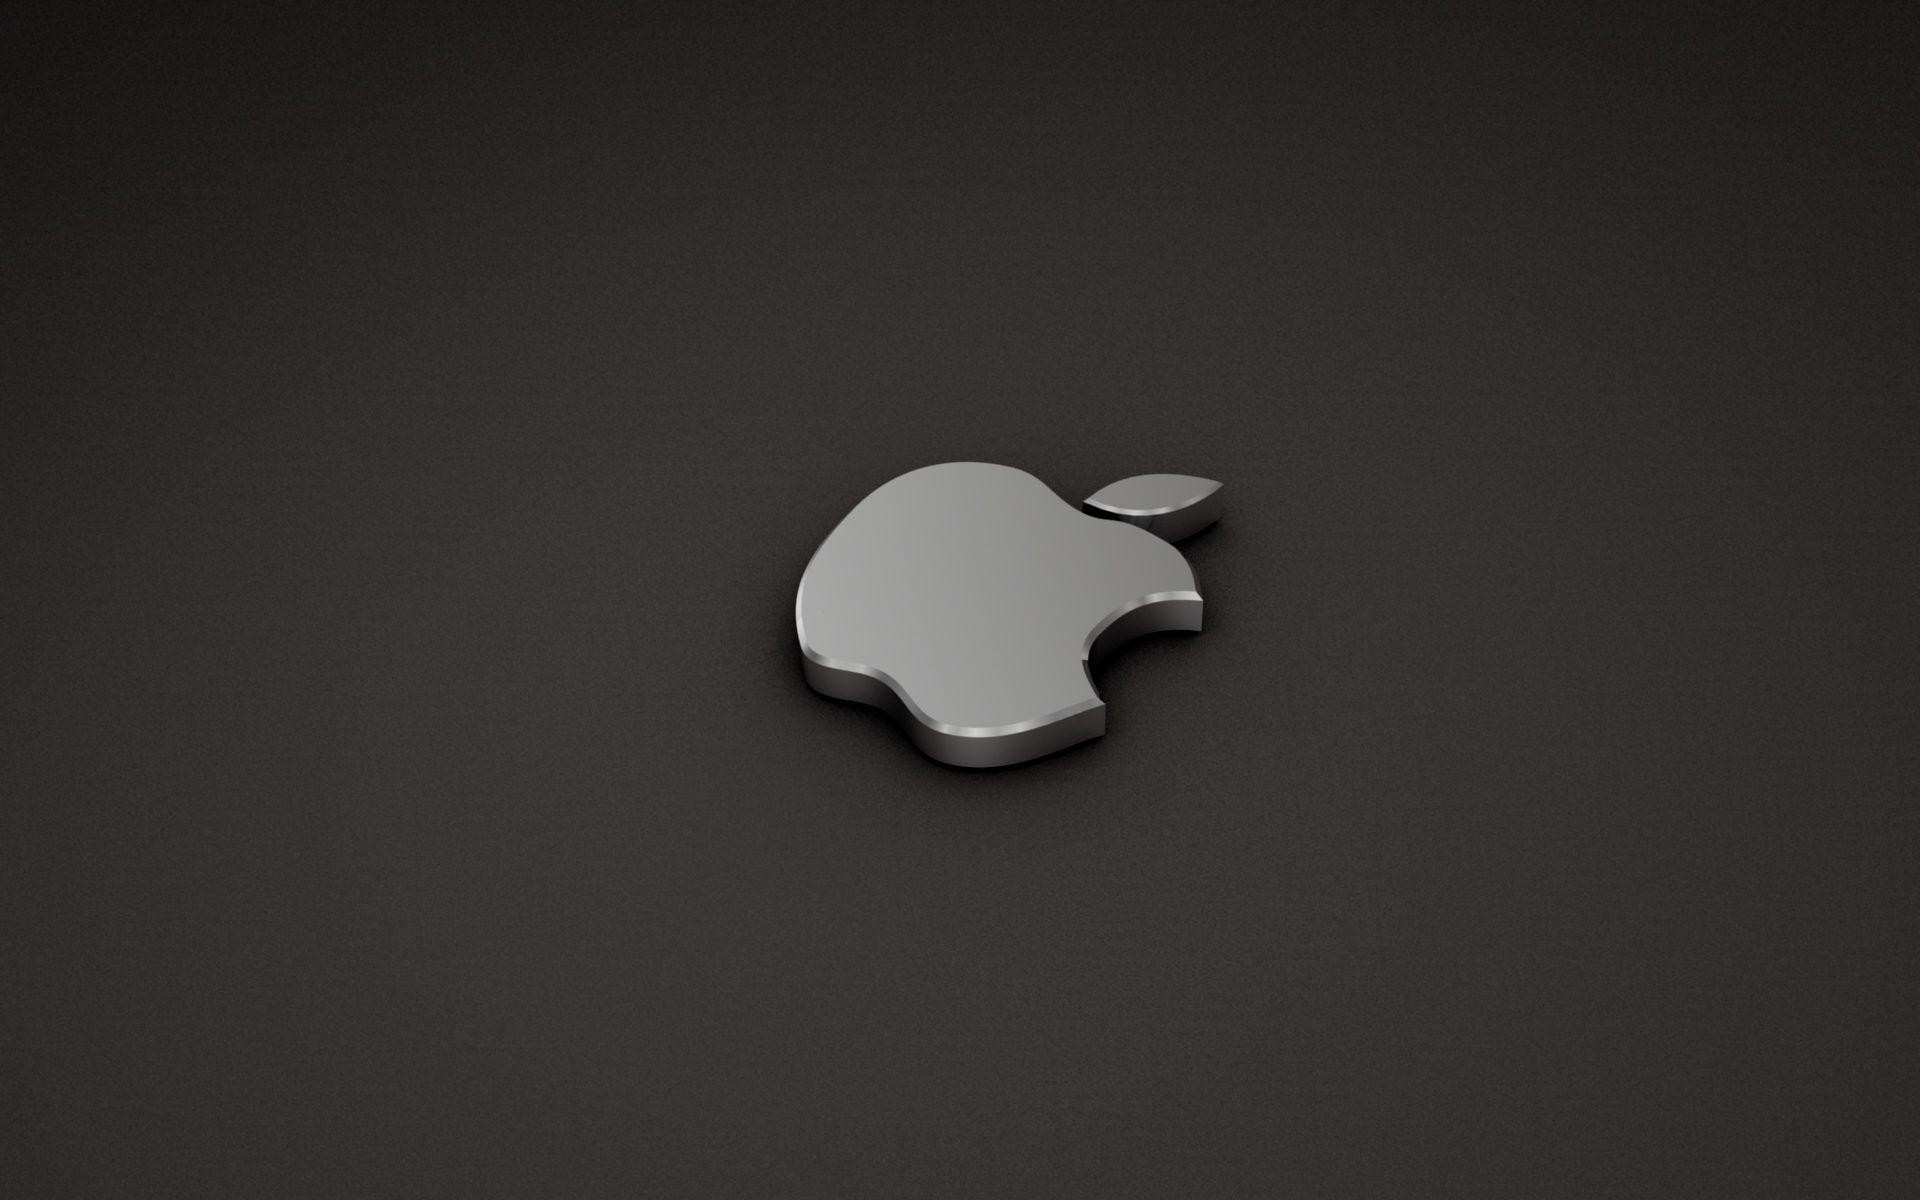 1920x1200 Apple Logo Image Full Hd Wallpaper Apple Logo Hd Wallpapers Wallpaper Cave